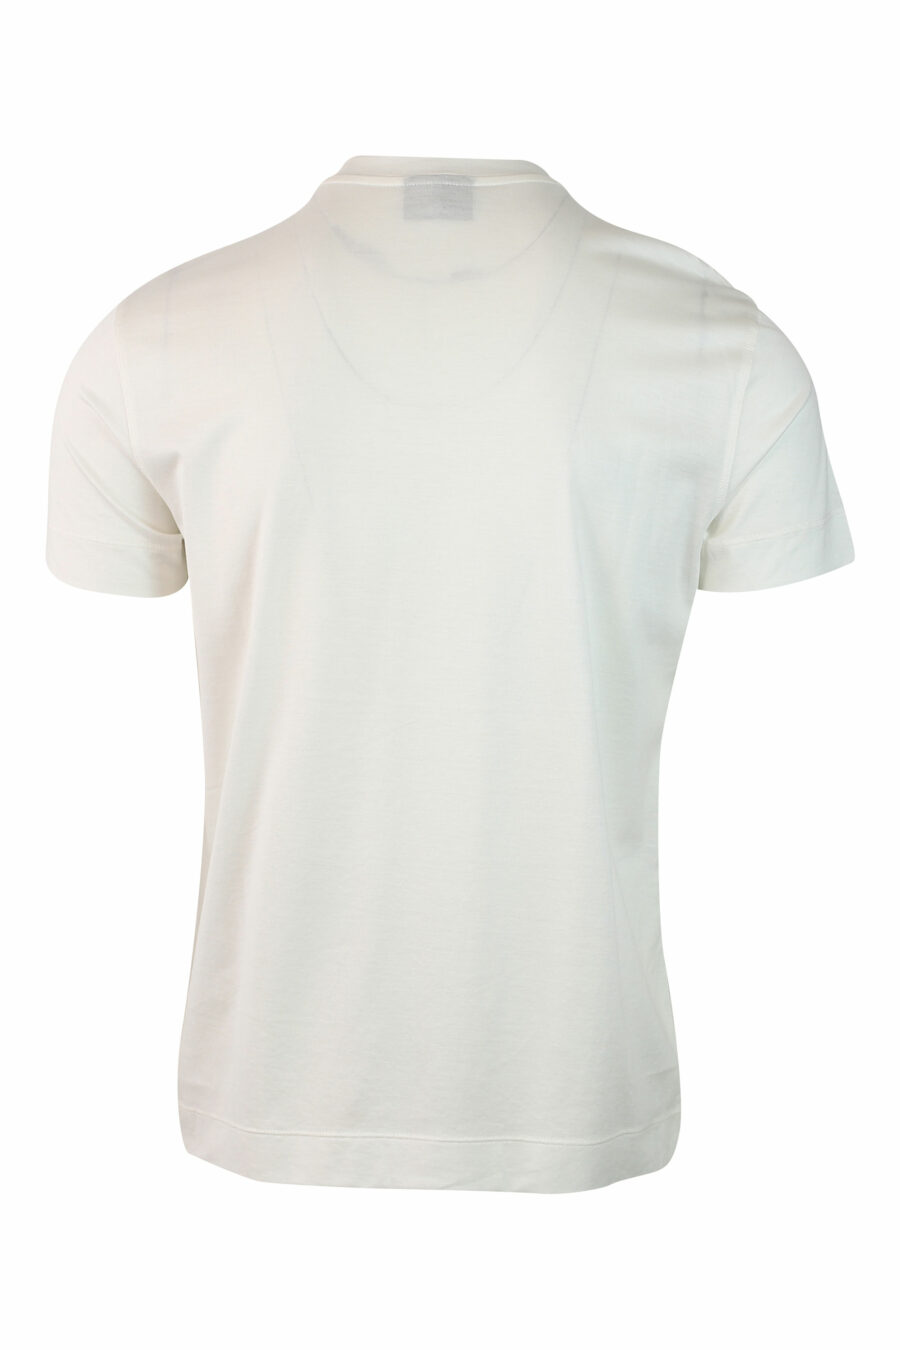 T-shirt branca com maxillover redondo - IMG 0148